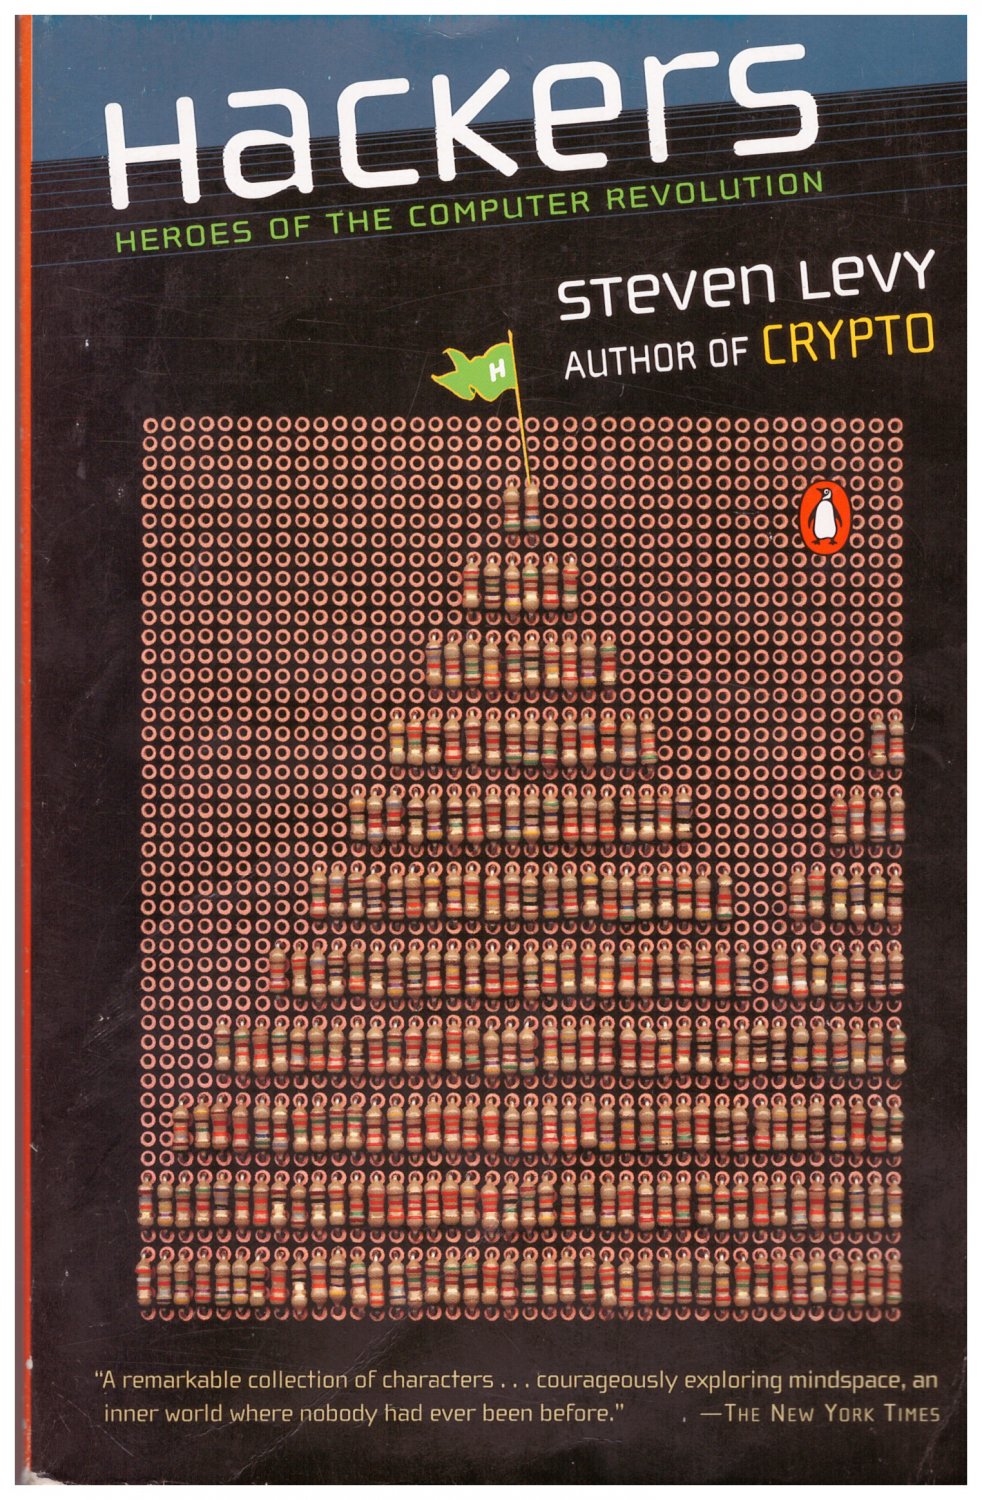 Hackers Heroes of the computer revolution“ (Steven Levy) – Buch gebraucht  kaufen – A02wPbTA01ZZ8